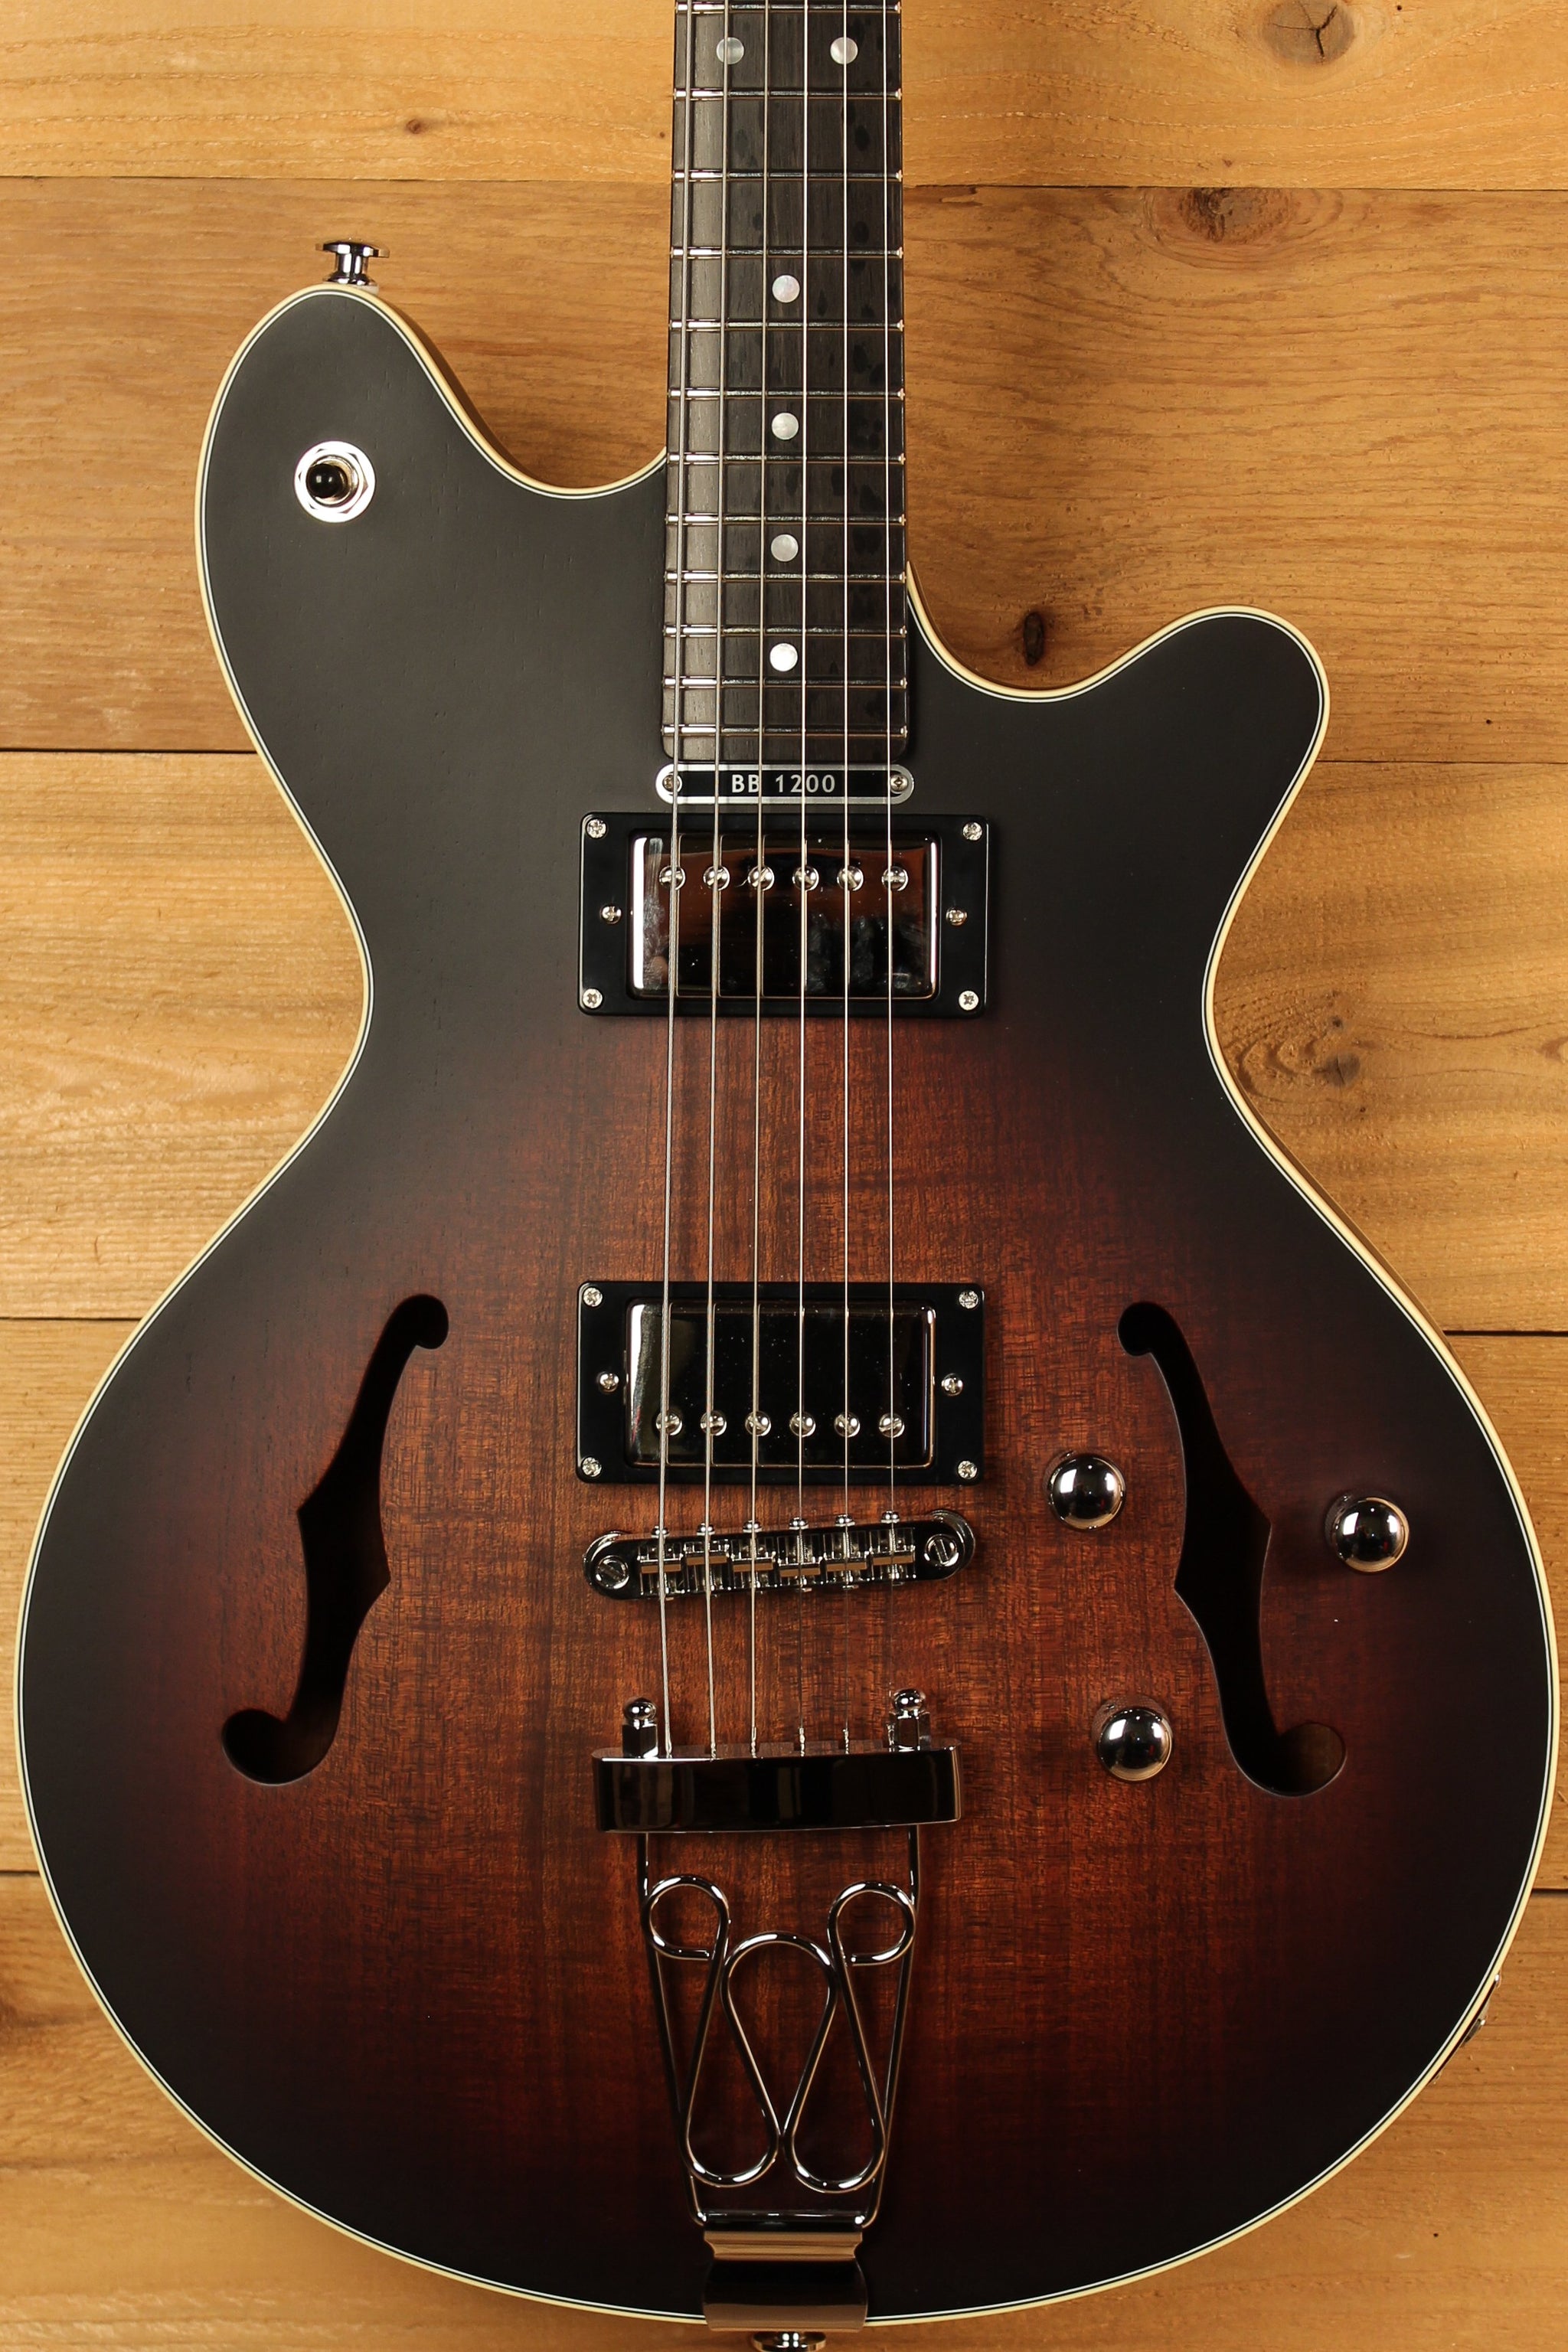 Maton BB1200 JH Electric Guitar w/ Bad Boy Pickups ID-13544 - Artisan Guitars